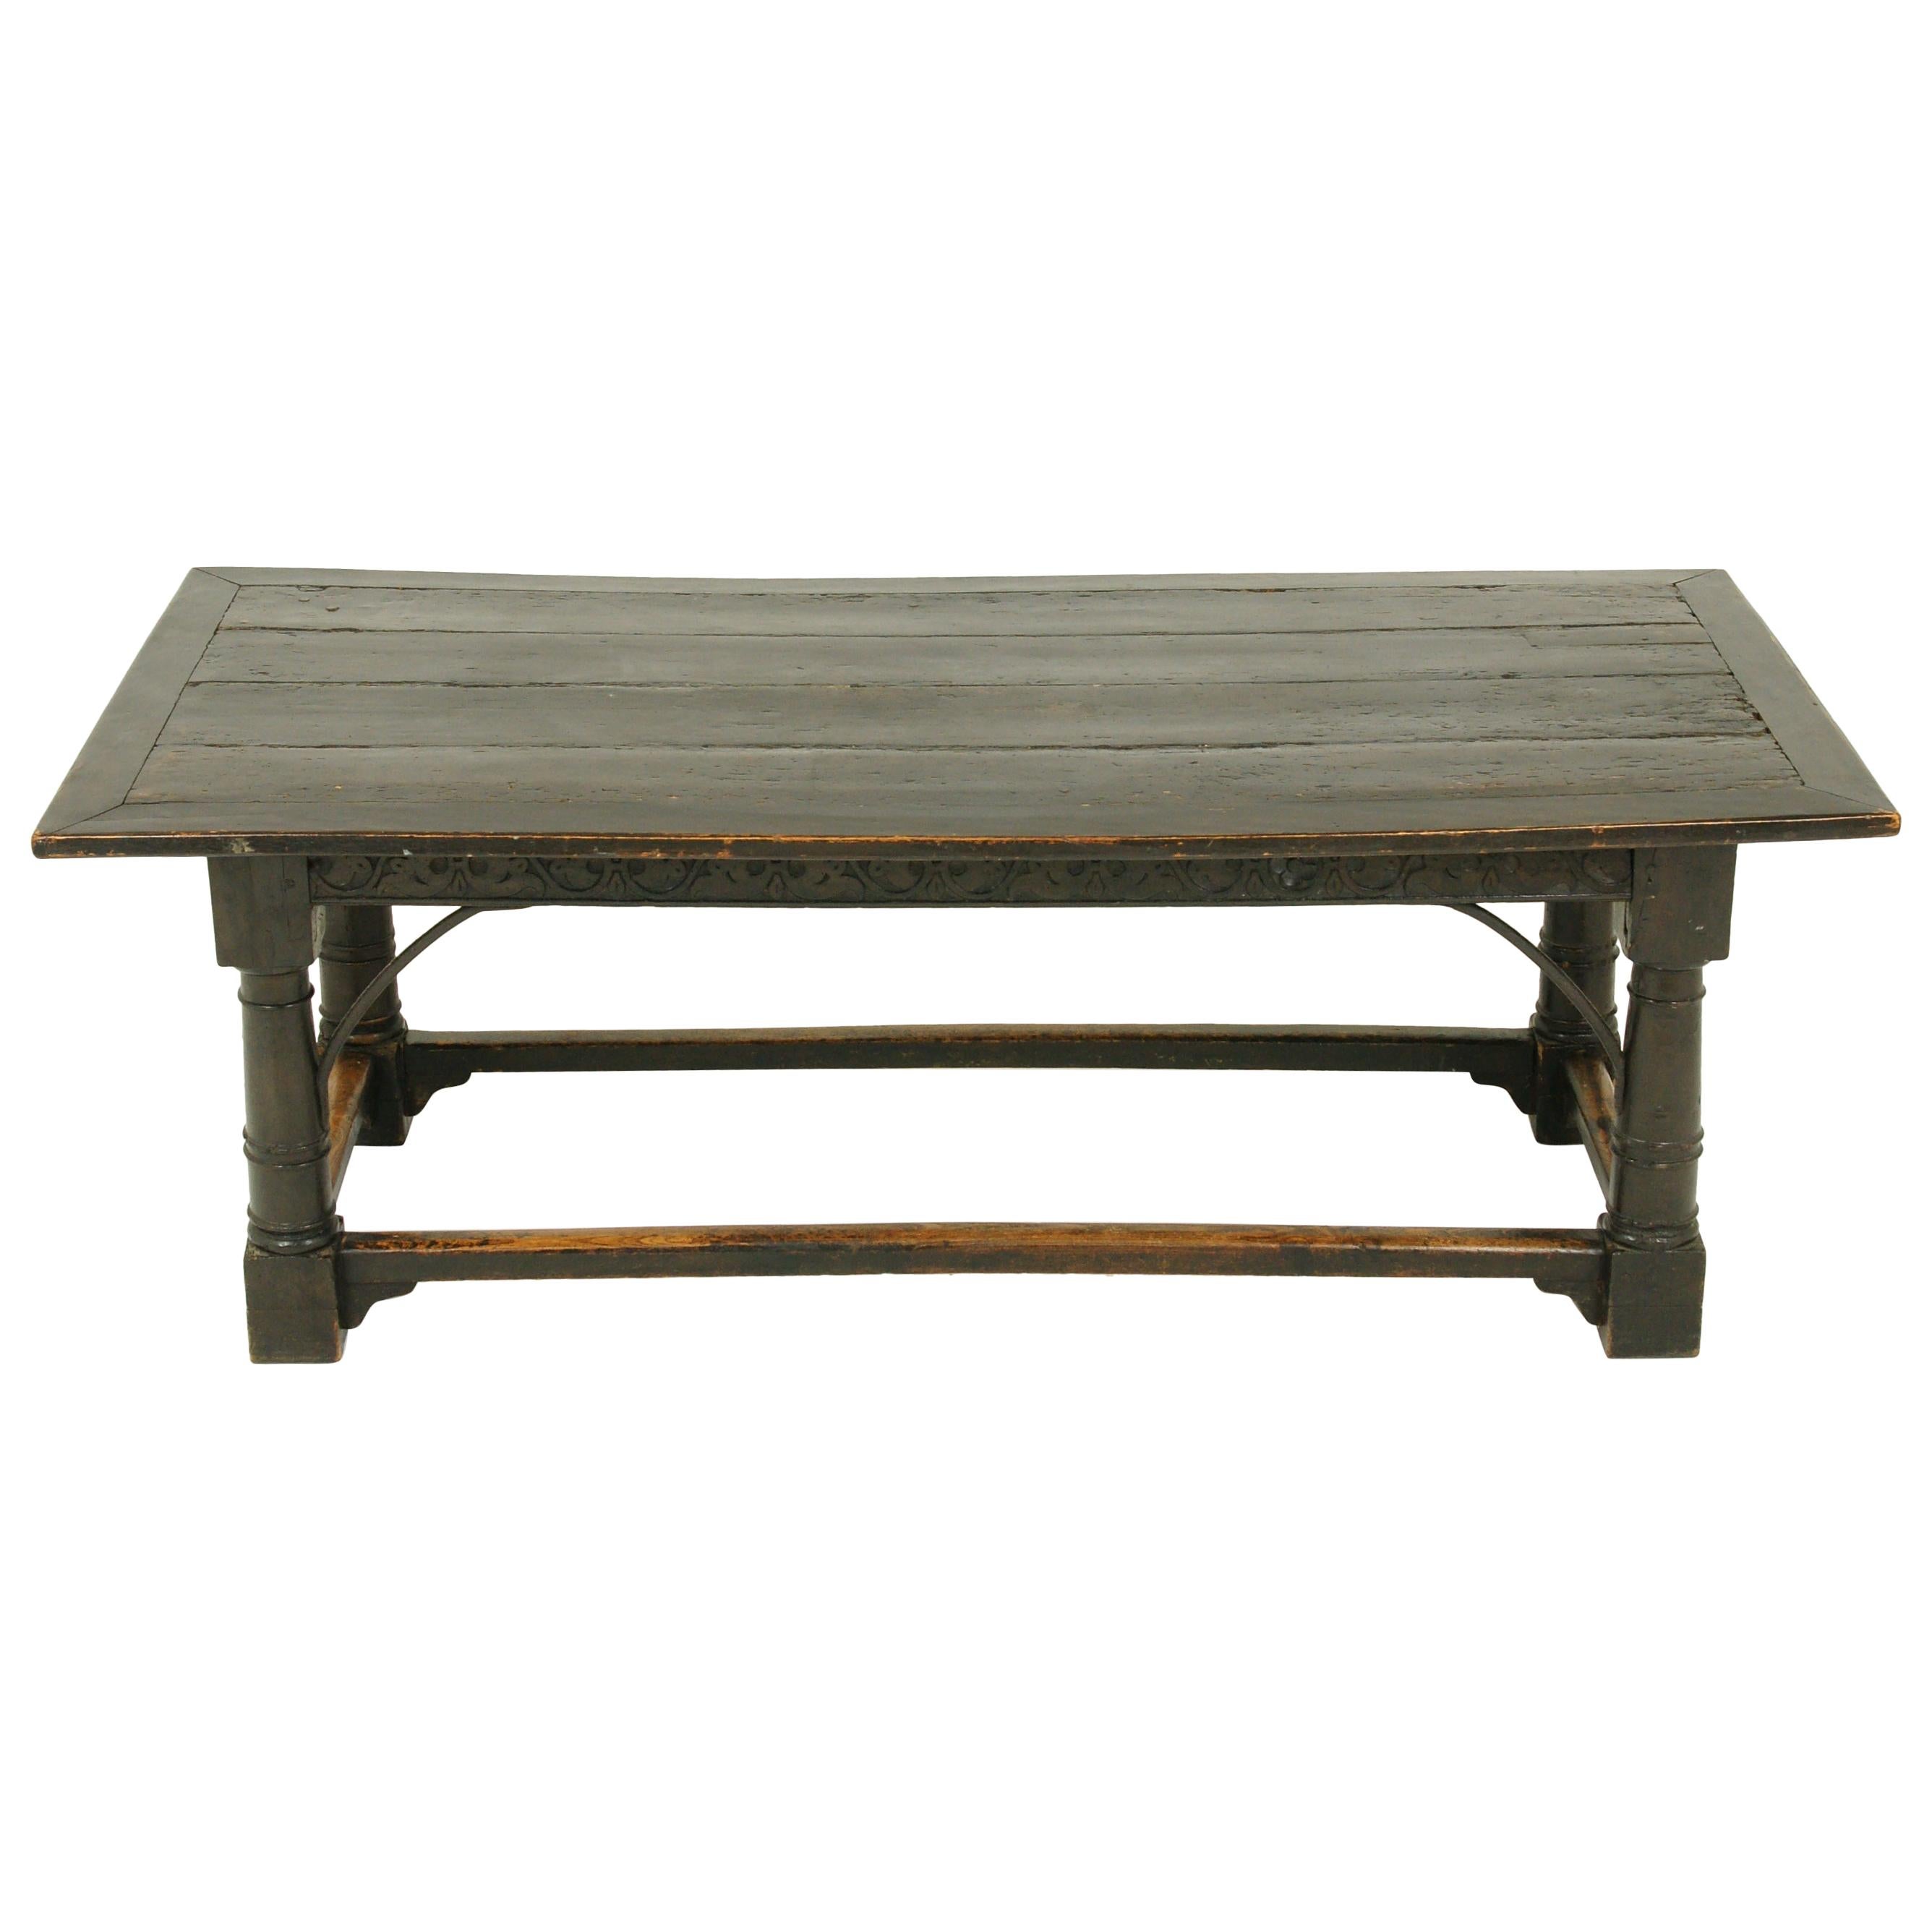 Antique Oak Table, Refectory Table, Scotland 1780, Antique Furniture, B1543